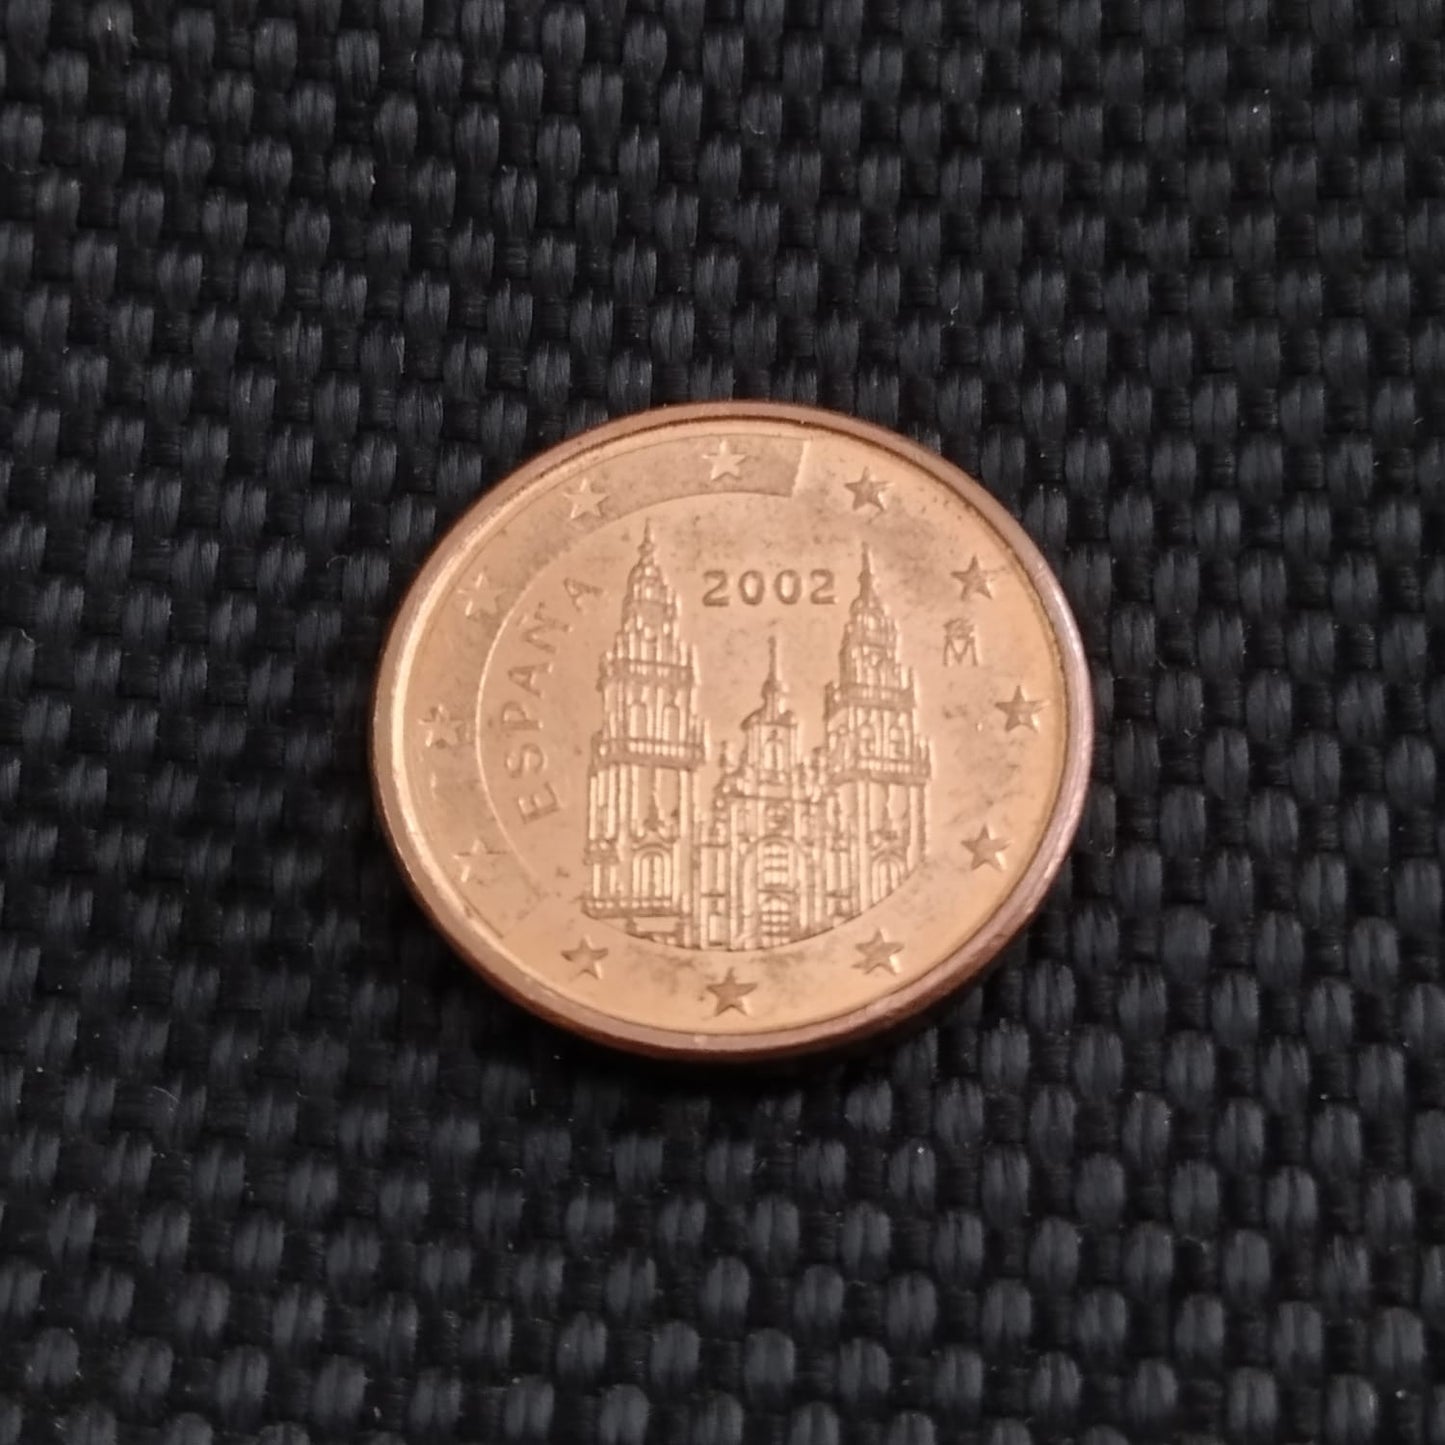 1 Euro Cent - Spain